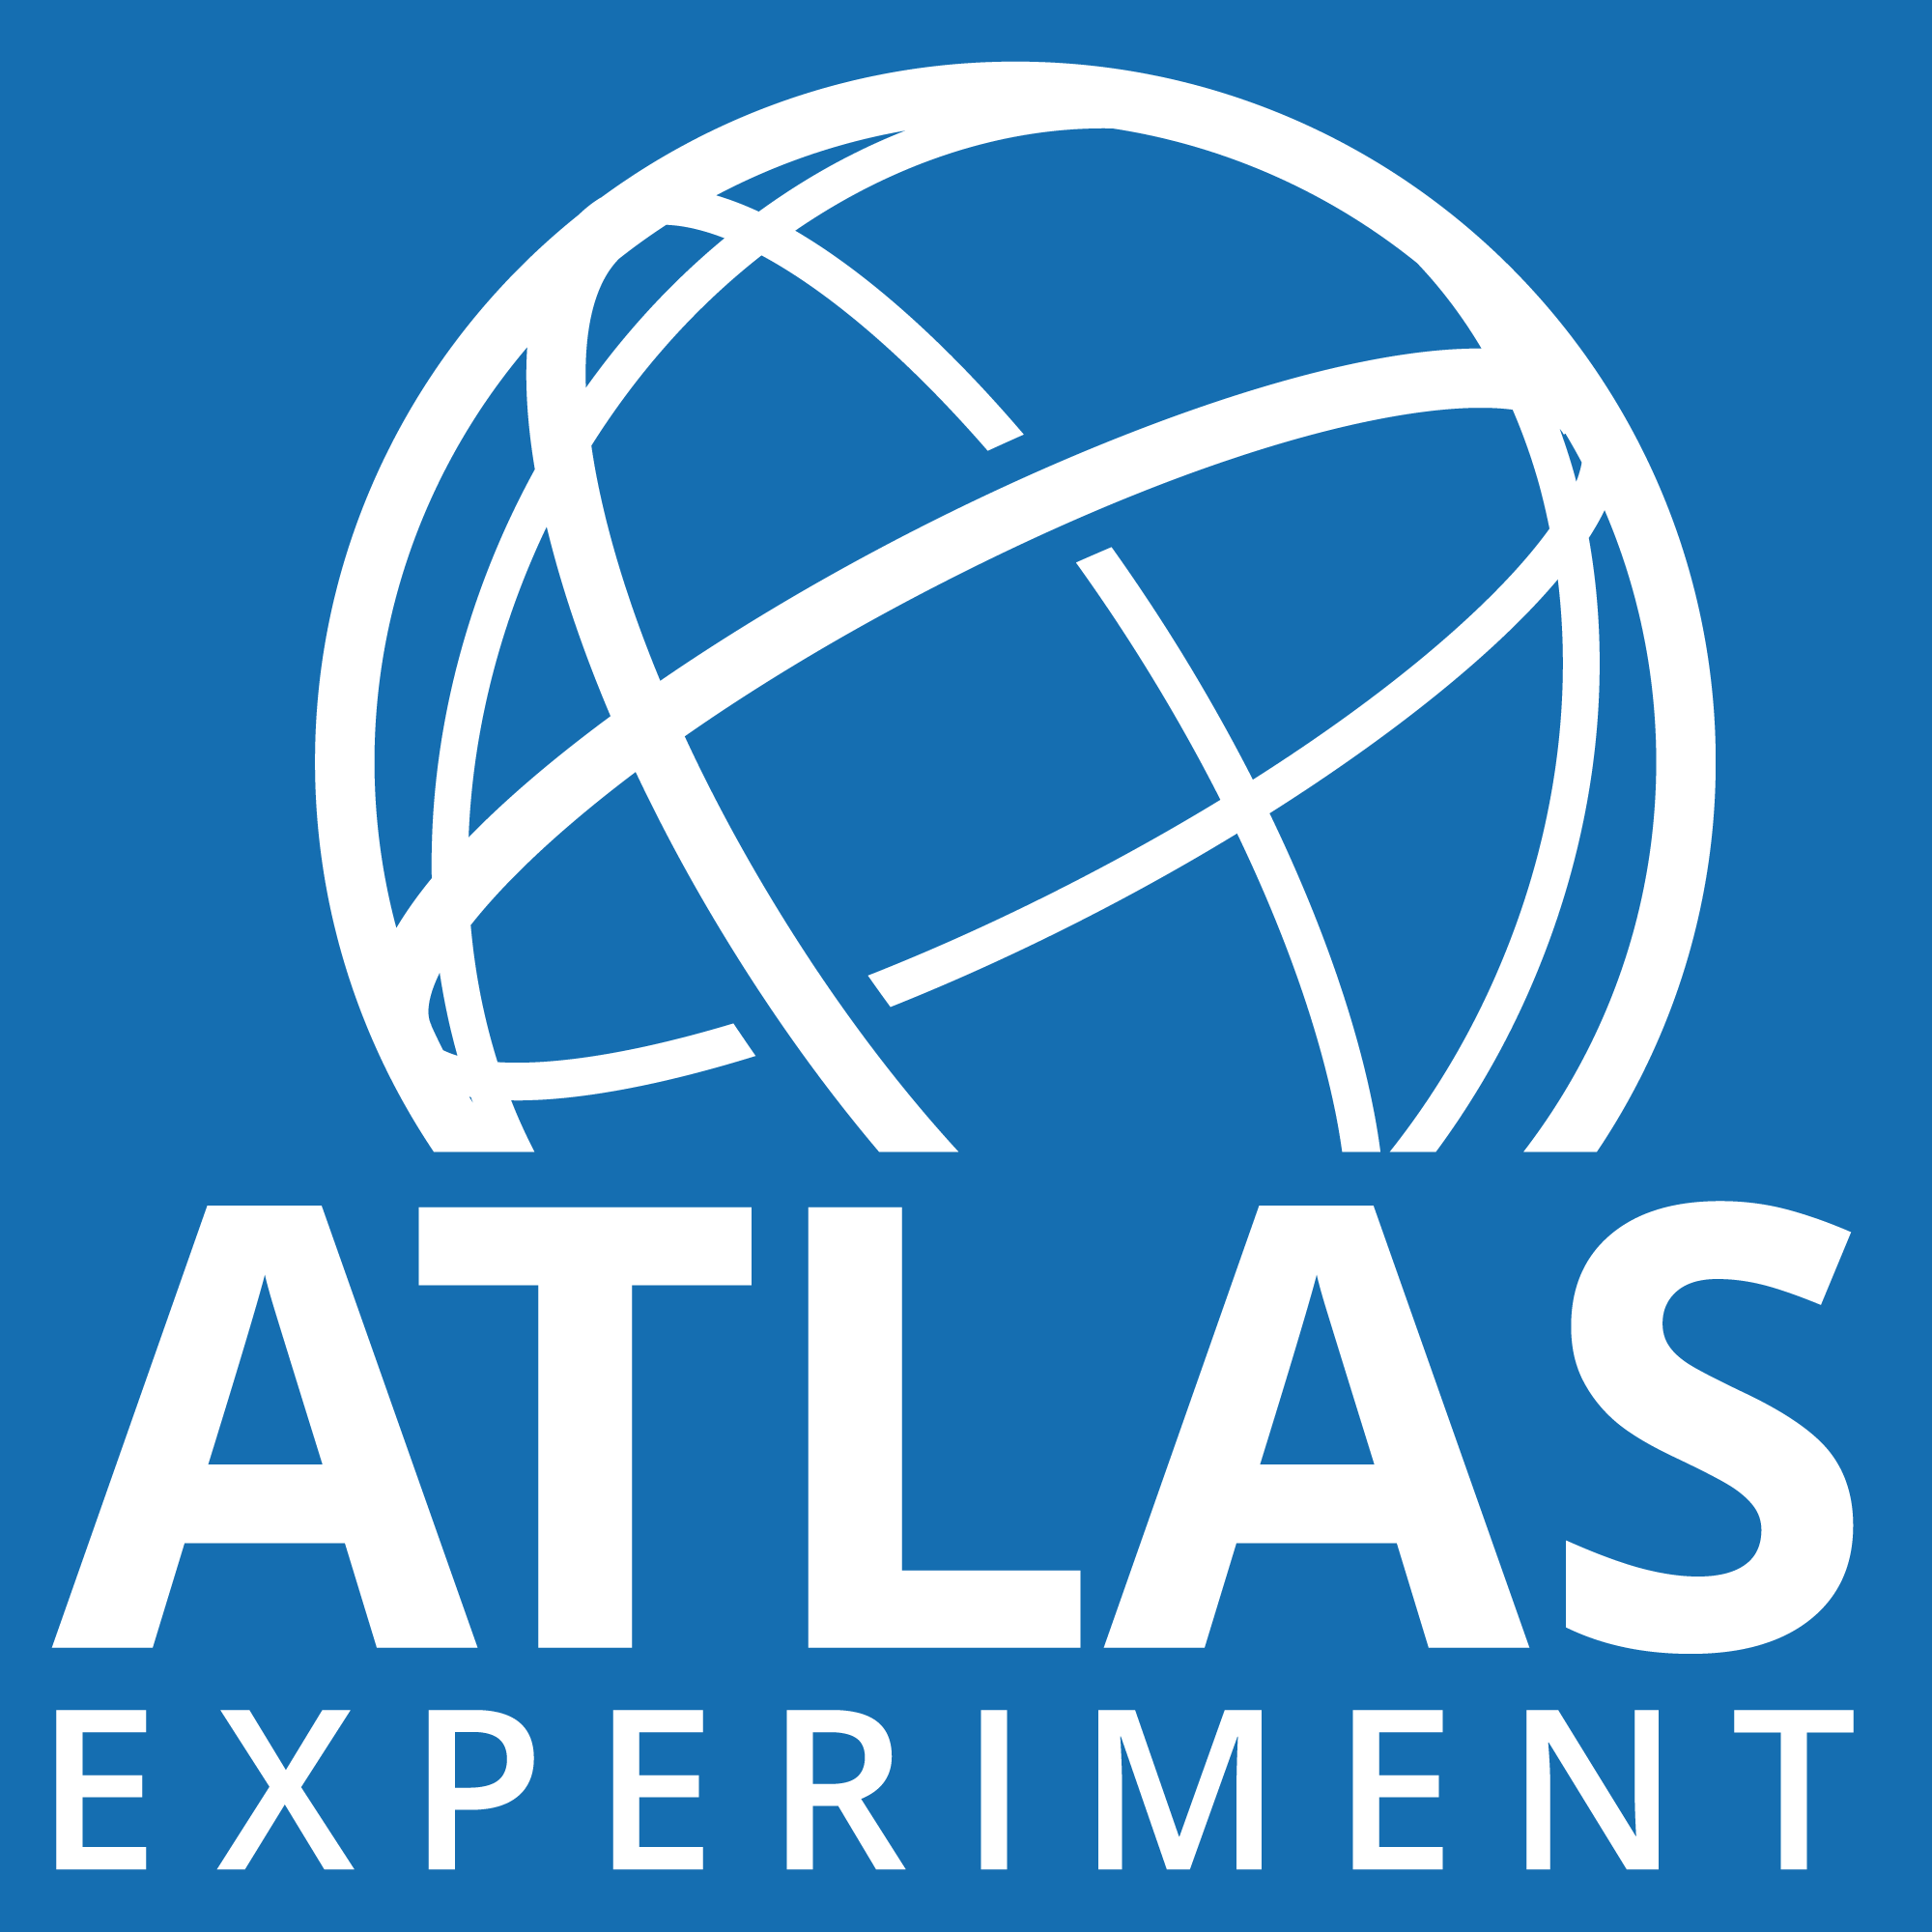 Image - The Atlas Corporation